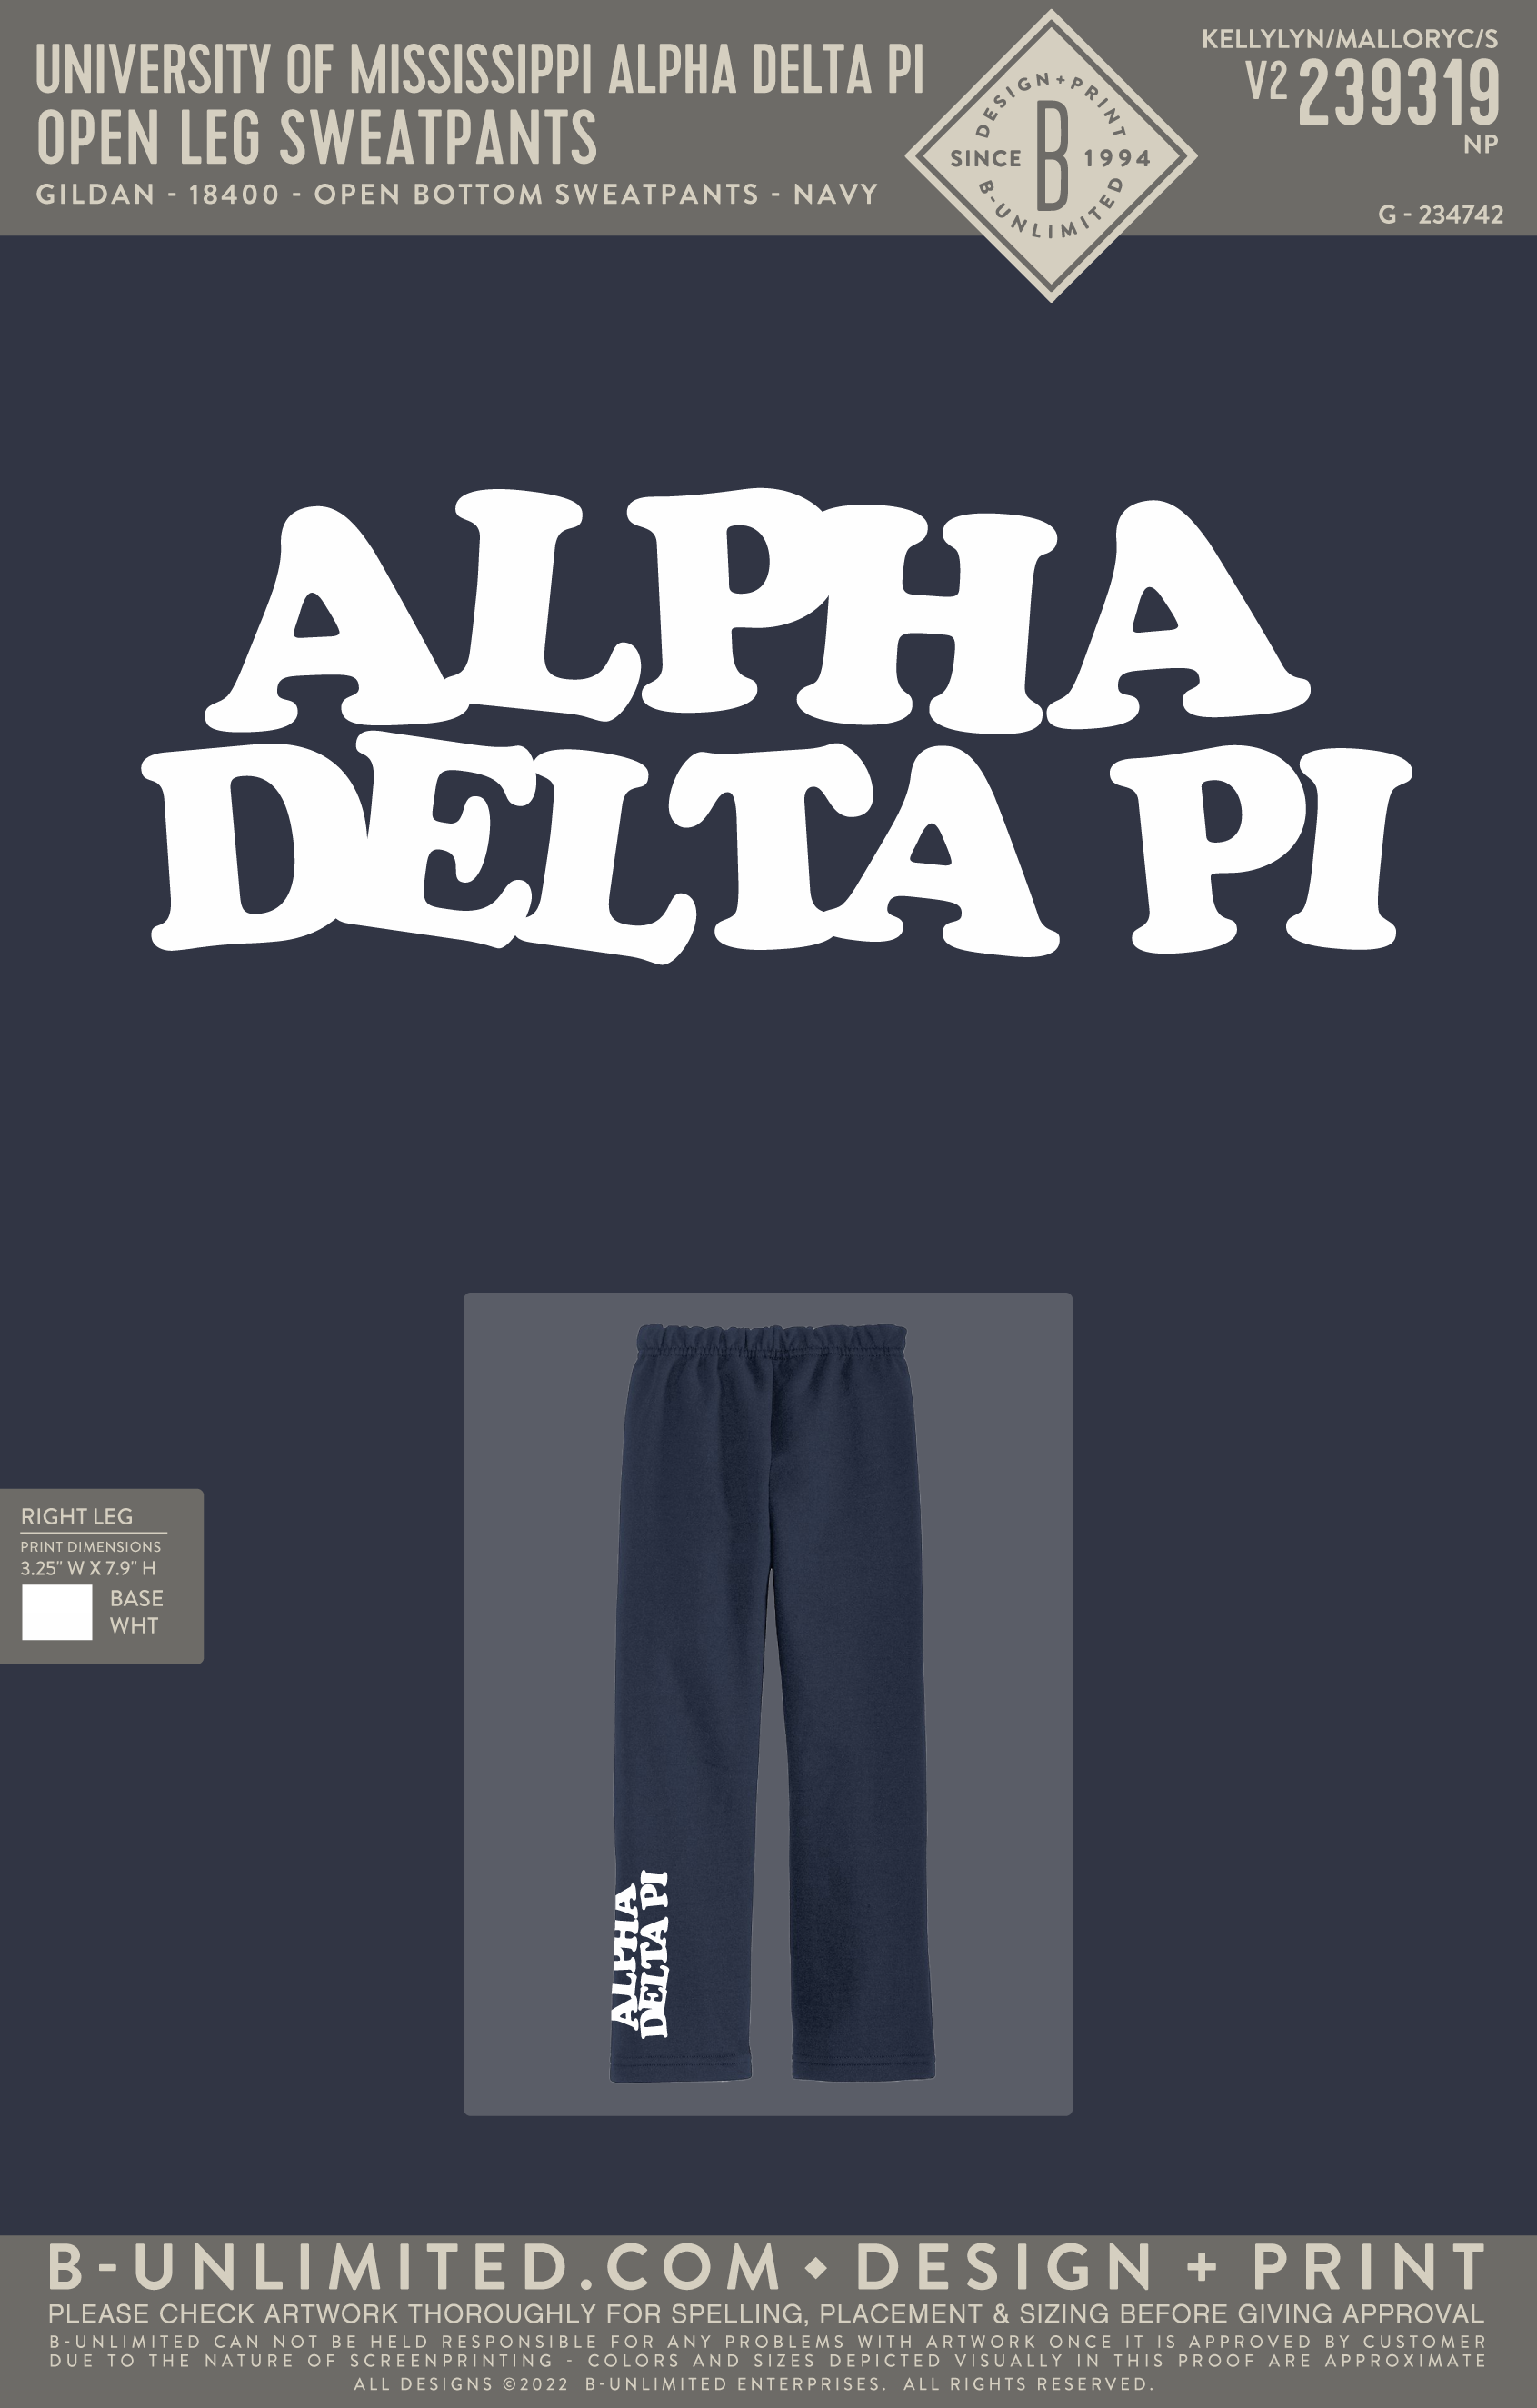 University of Mississippi Alpha Delta Pi - Open Leg Sweatpants - Gildan - 18400 - Open Bottom Sweatpants - Navy